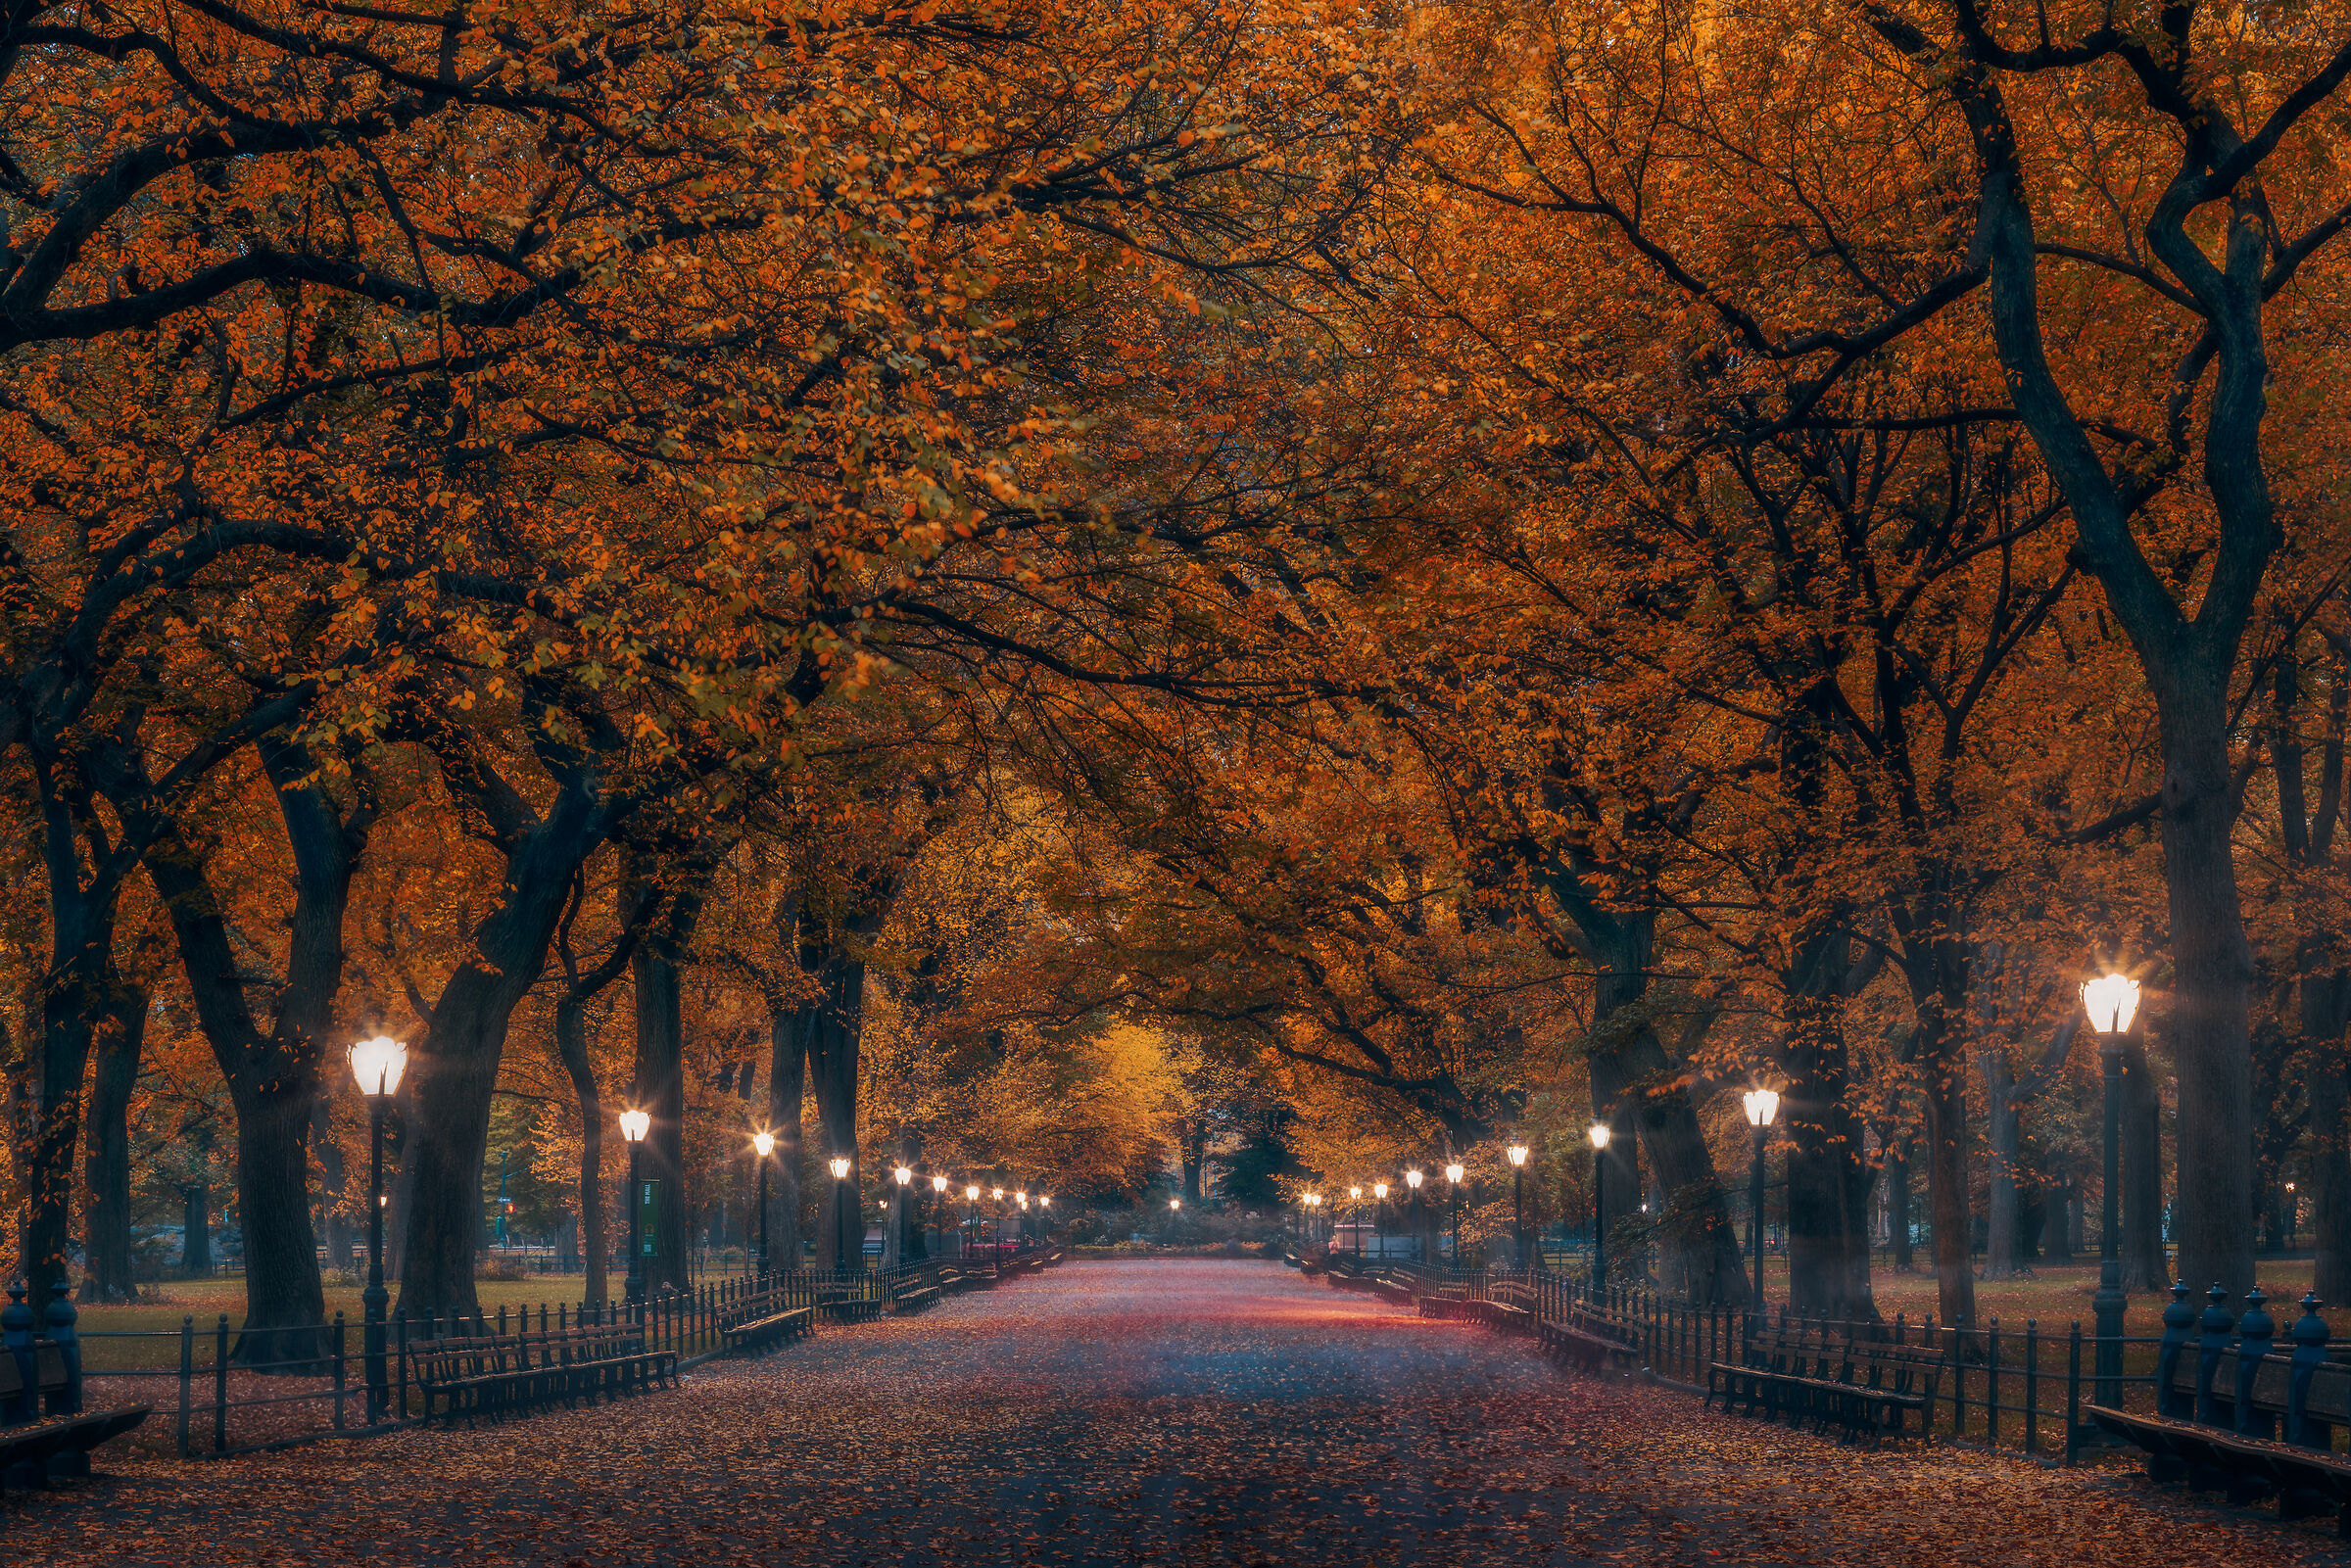 Autumn in Central Park...